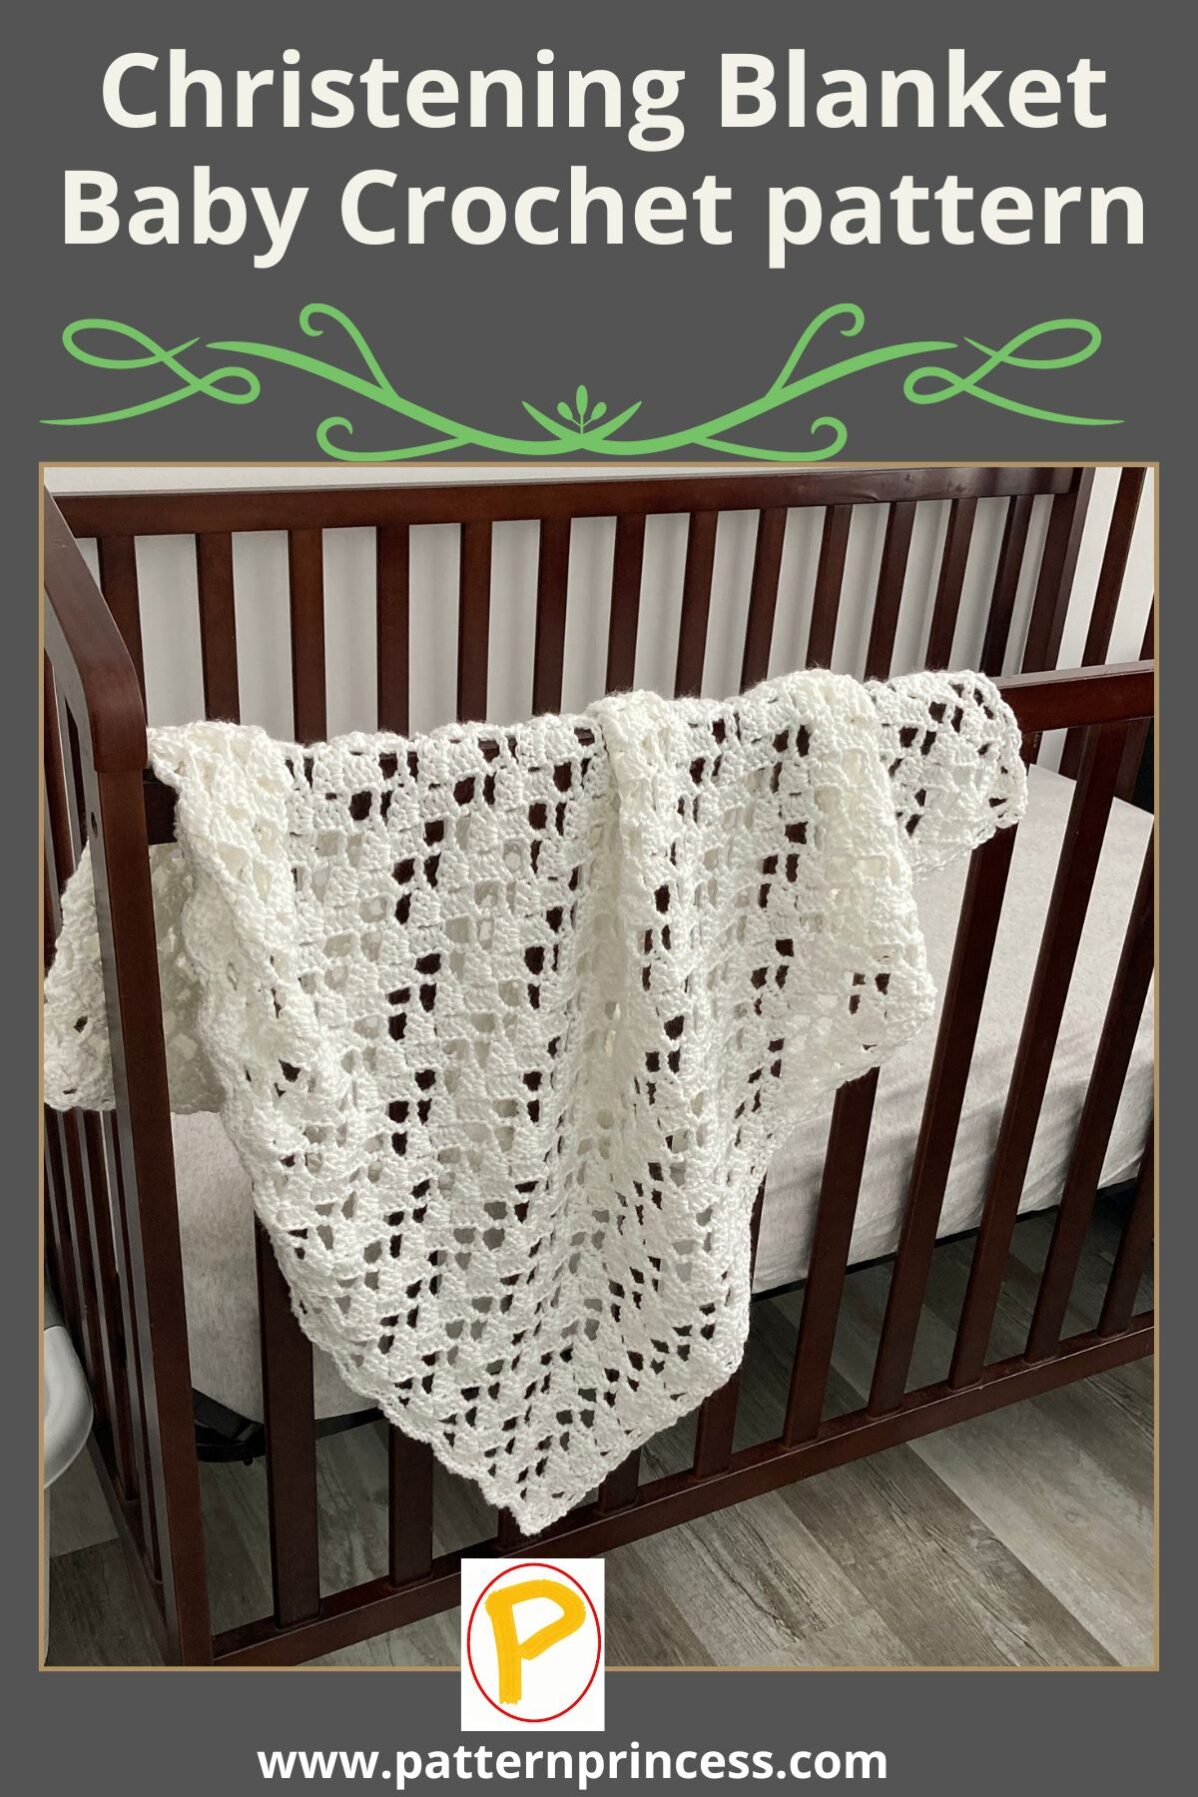 Christening Blanket Baby Crochet pattern